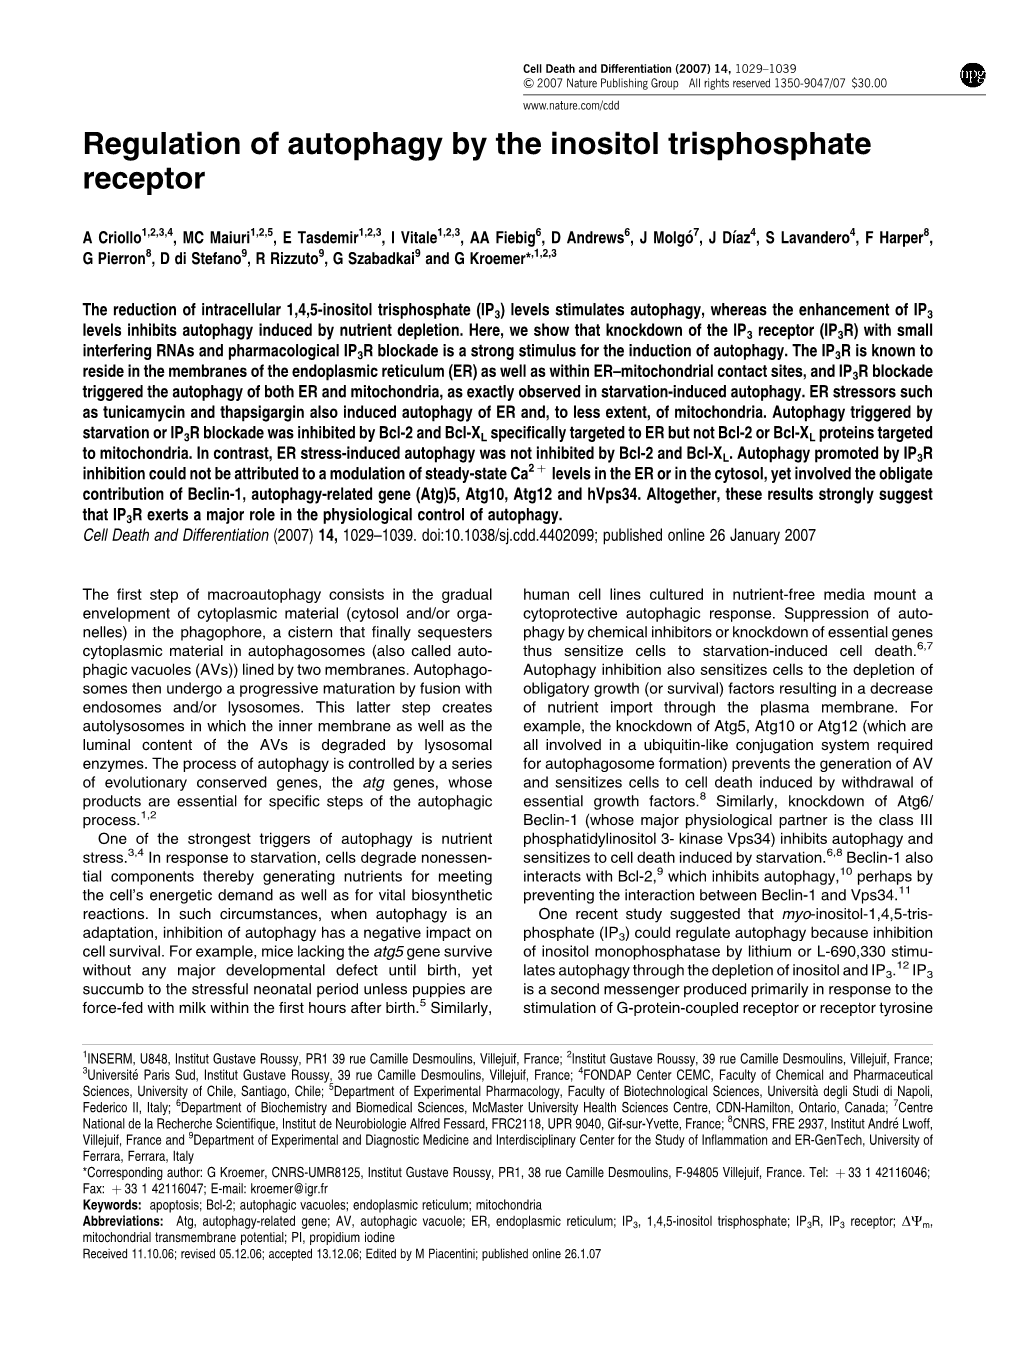 Regulation of Autophagy by the Inositol Trisphosphate Receptor